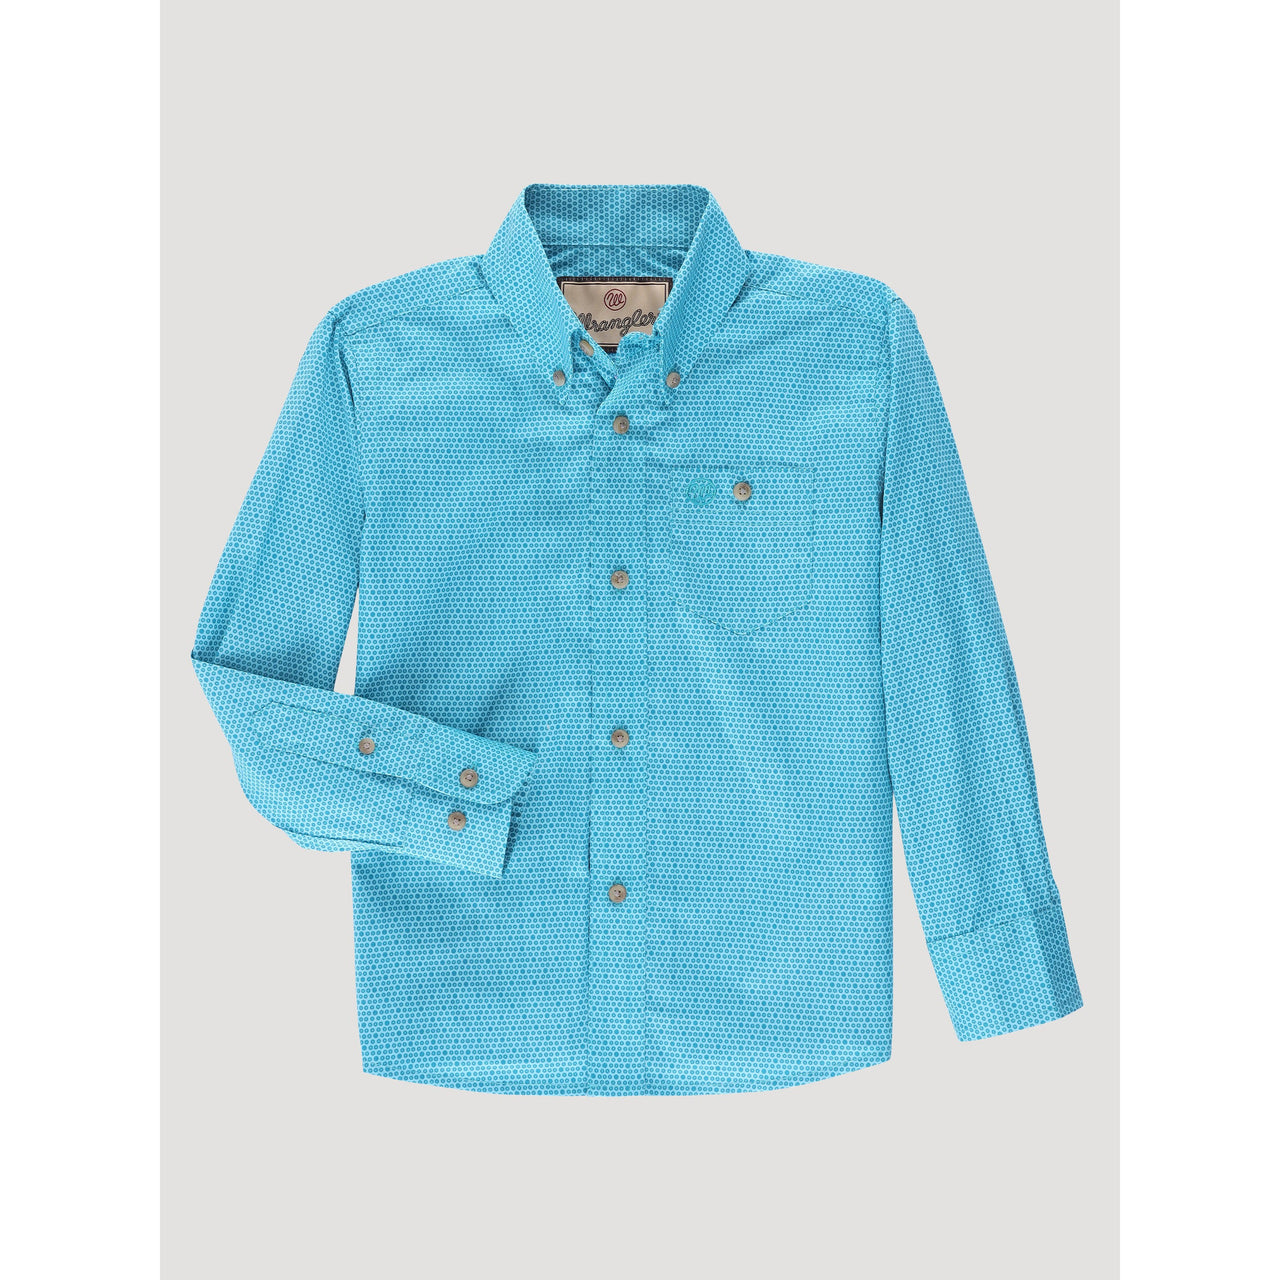 Wrangler Boy's Classic Long Sleeve Shirt - Turquoise